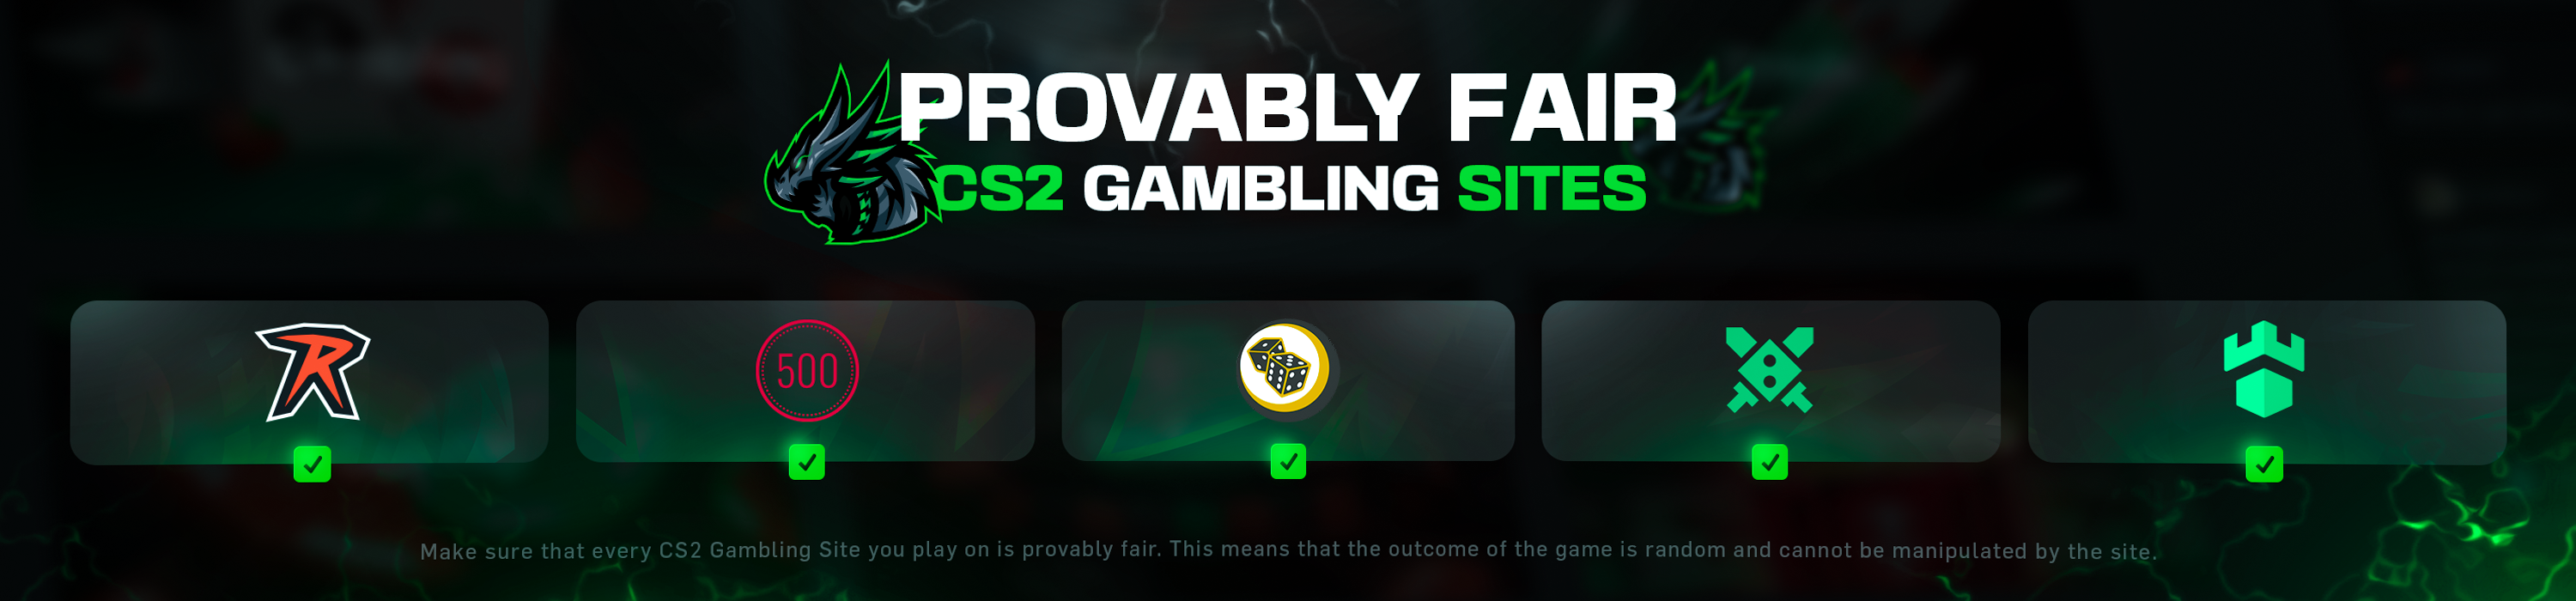 Provably Fair CS2 Gambling Sites